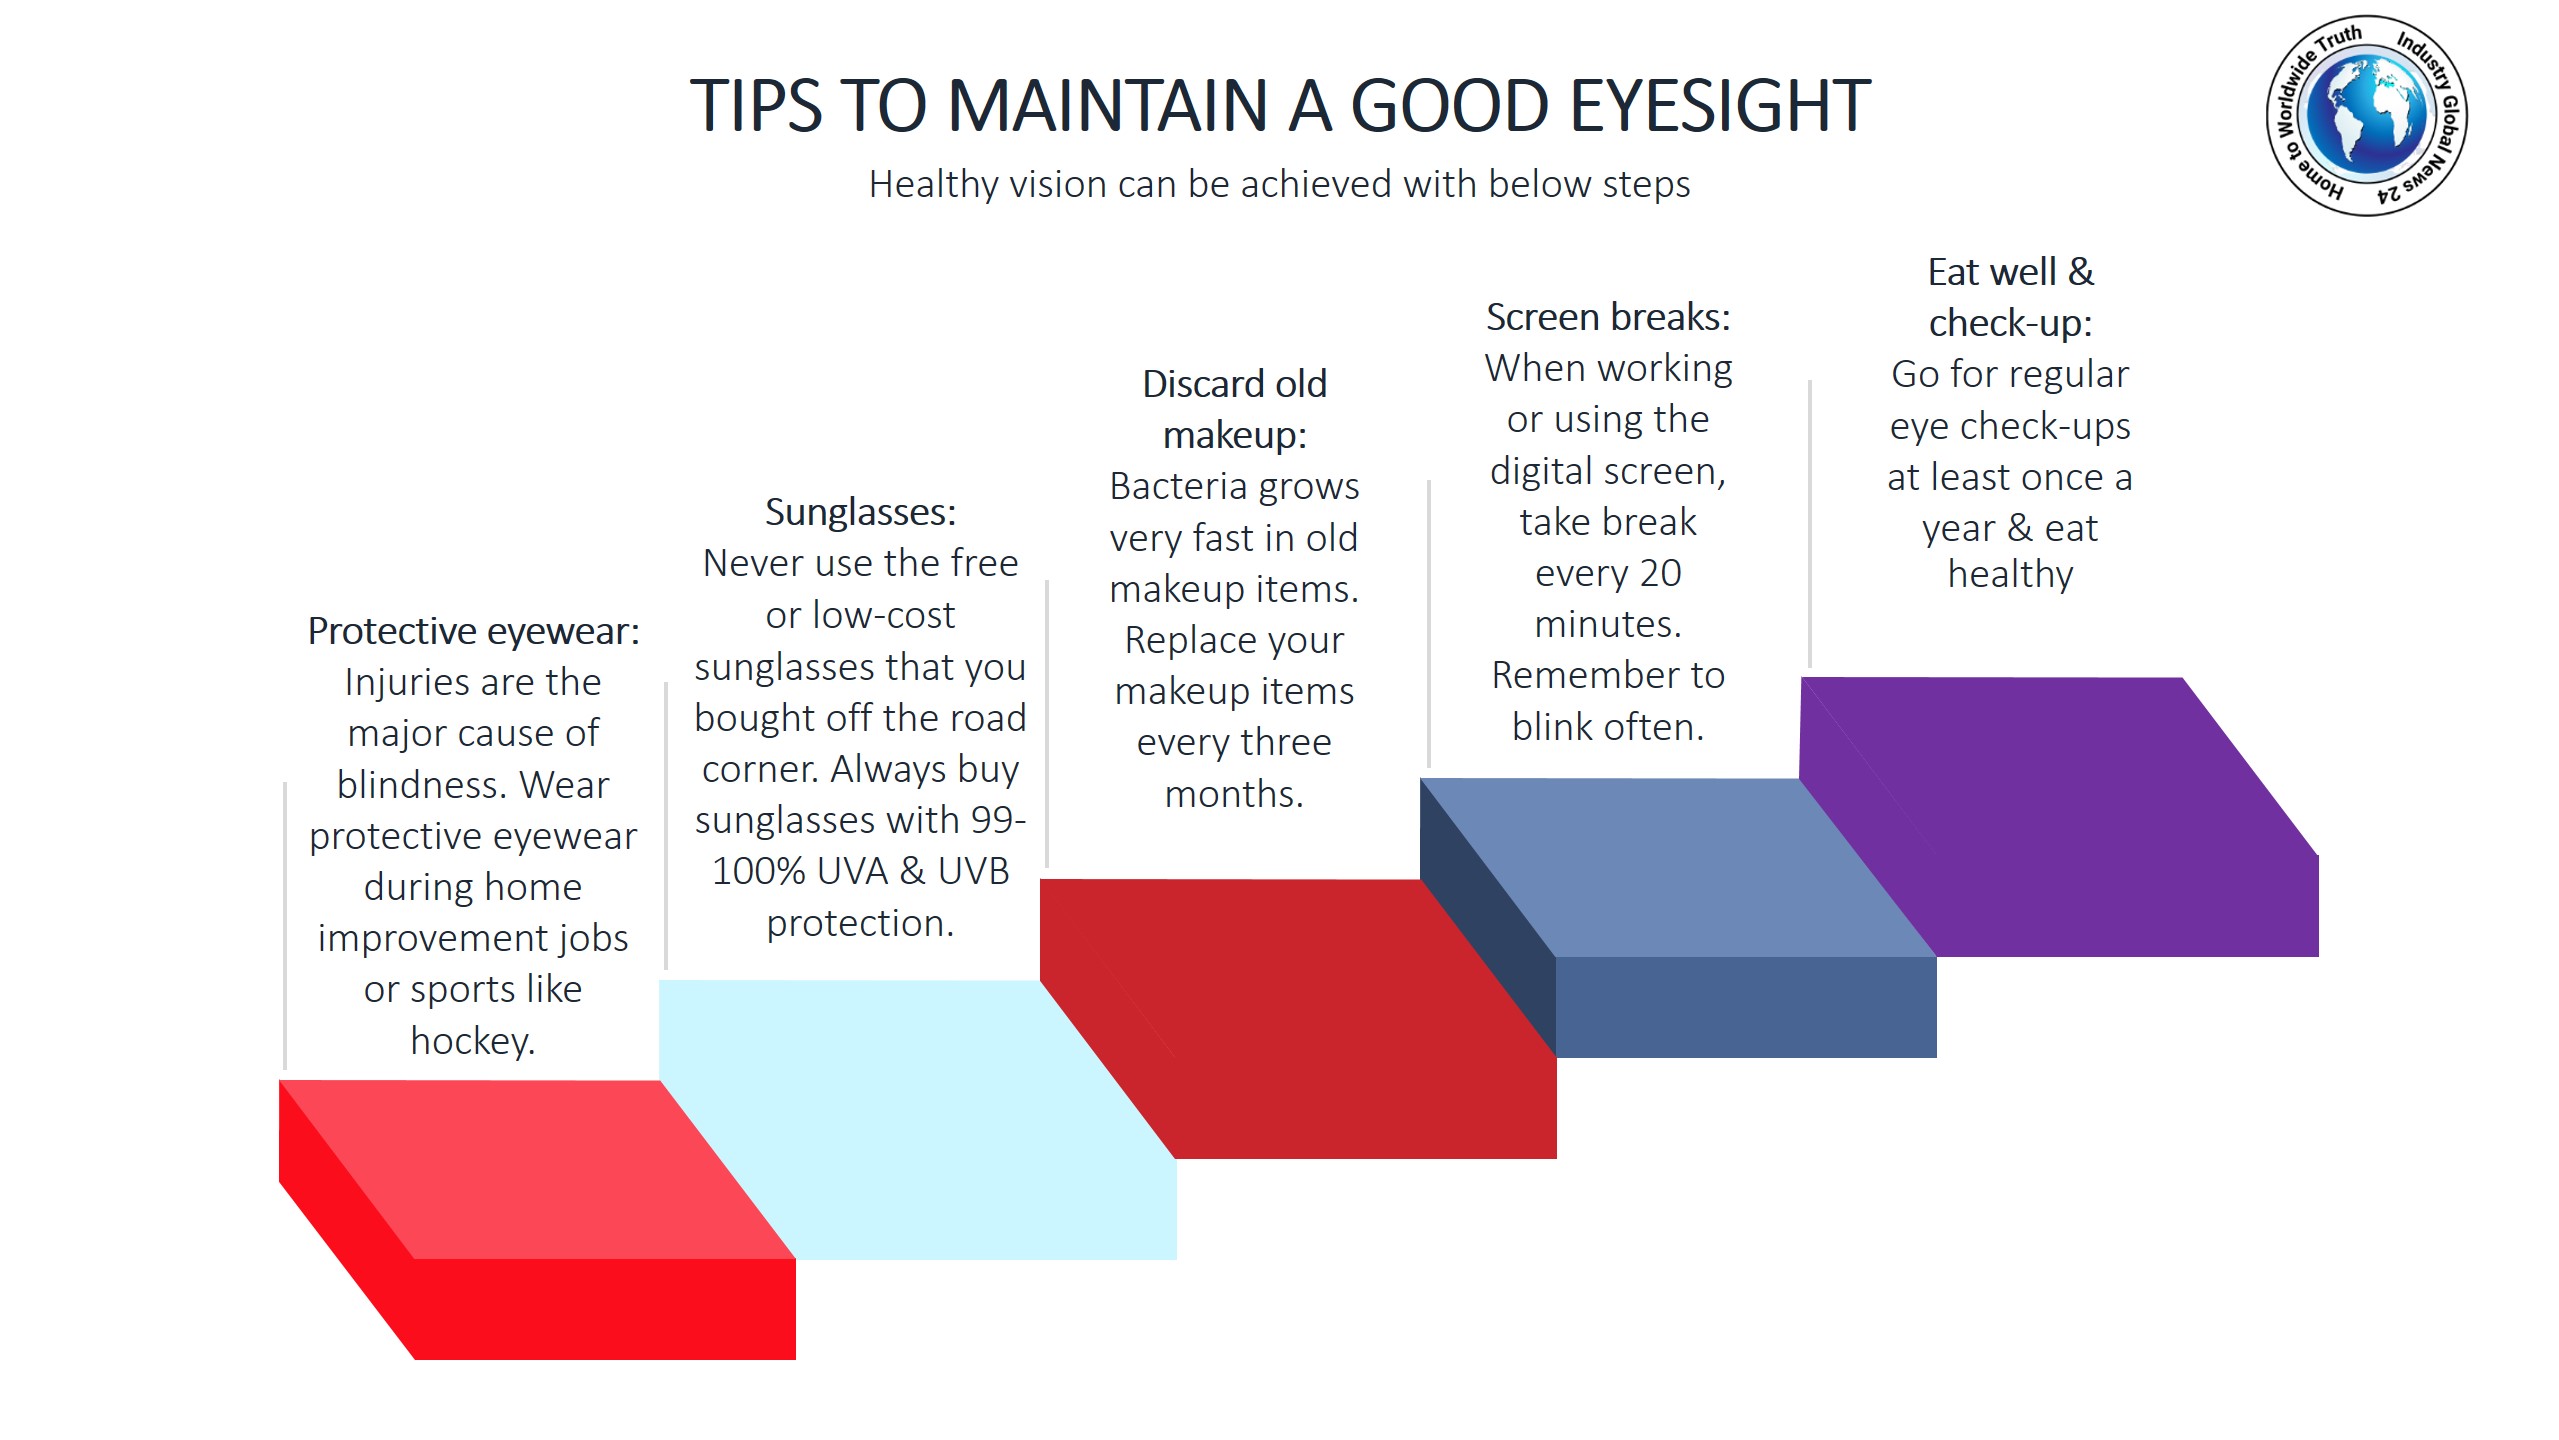 Tips to maintain a good eyesight